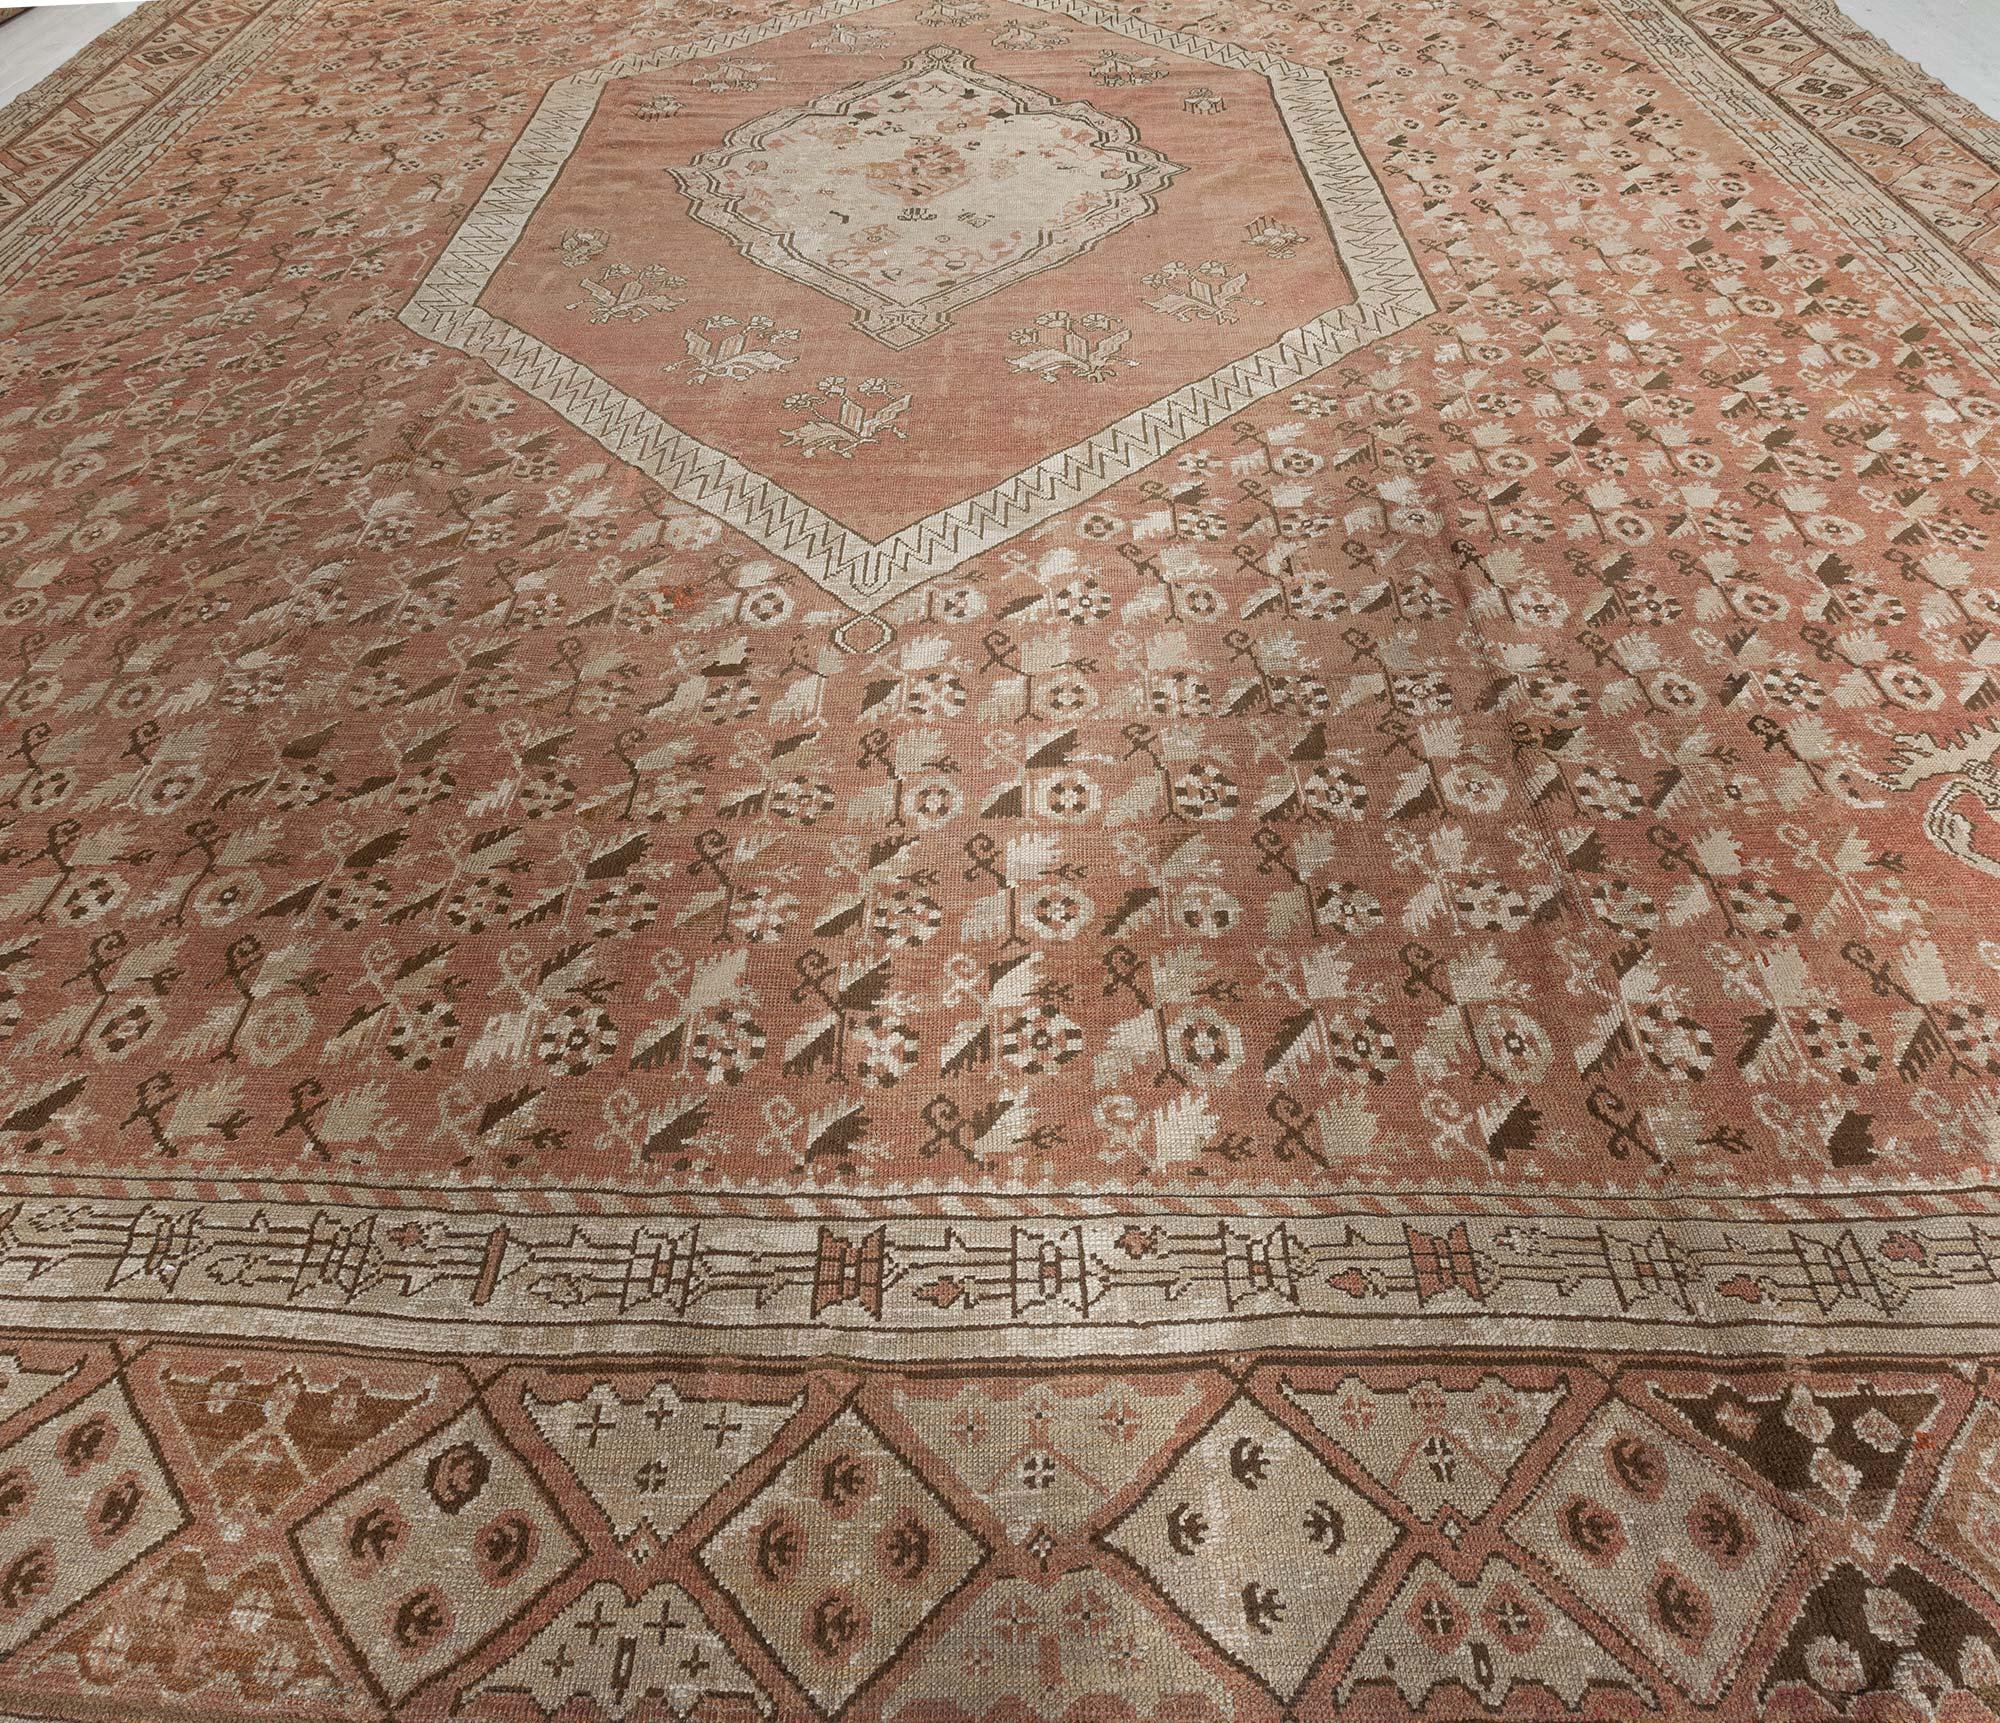 Extra large antique Turkish Ghiordes handmade wool rug
Size: 16'7